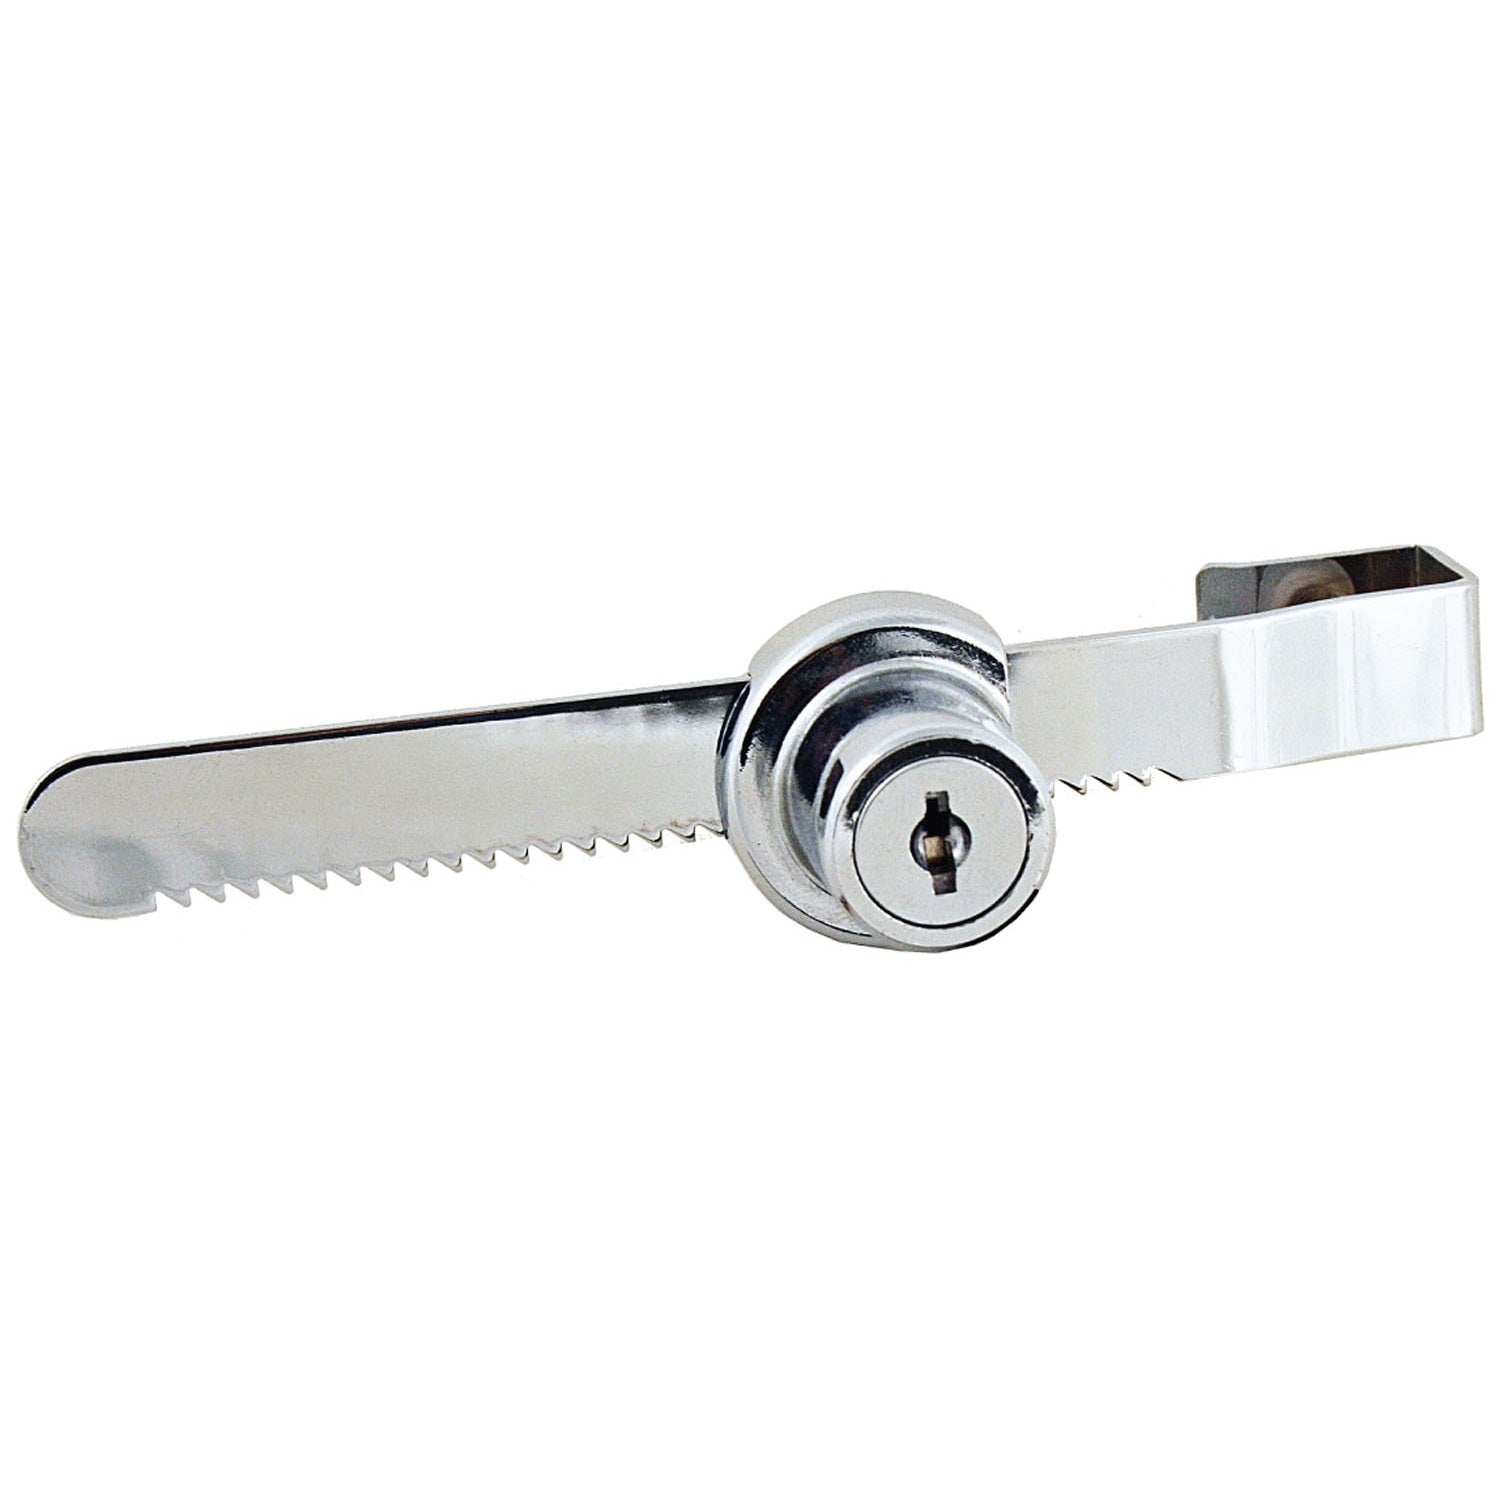 Sterling C125 Sliding Glass Door Lock - Premium Door Locks from Sterling Locks - Just $0.95! Shop now at W Hurst & Son (IW) Ltd